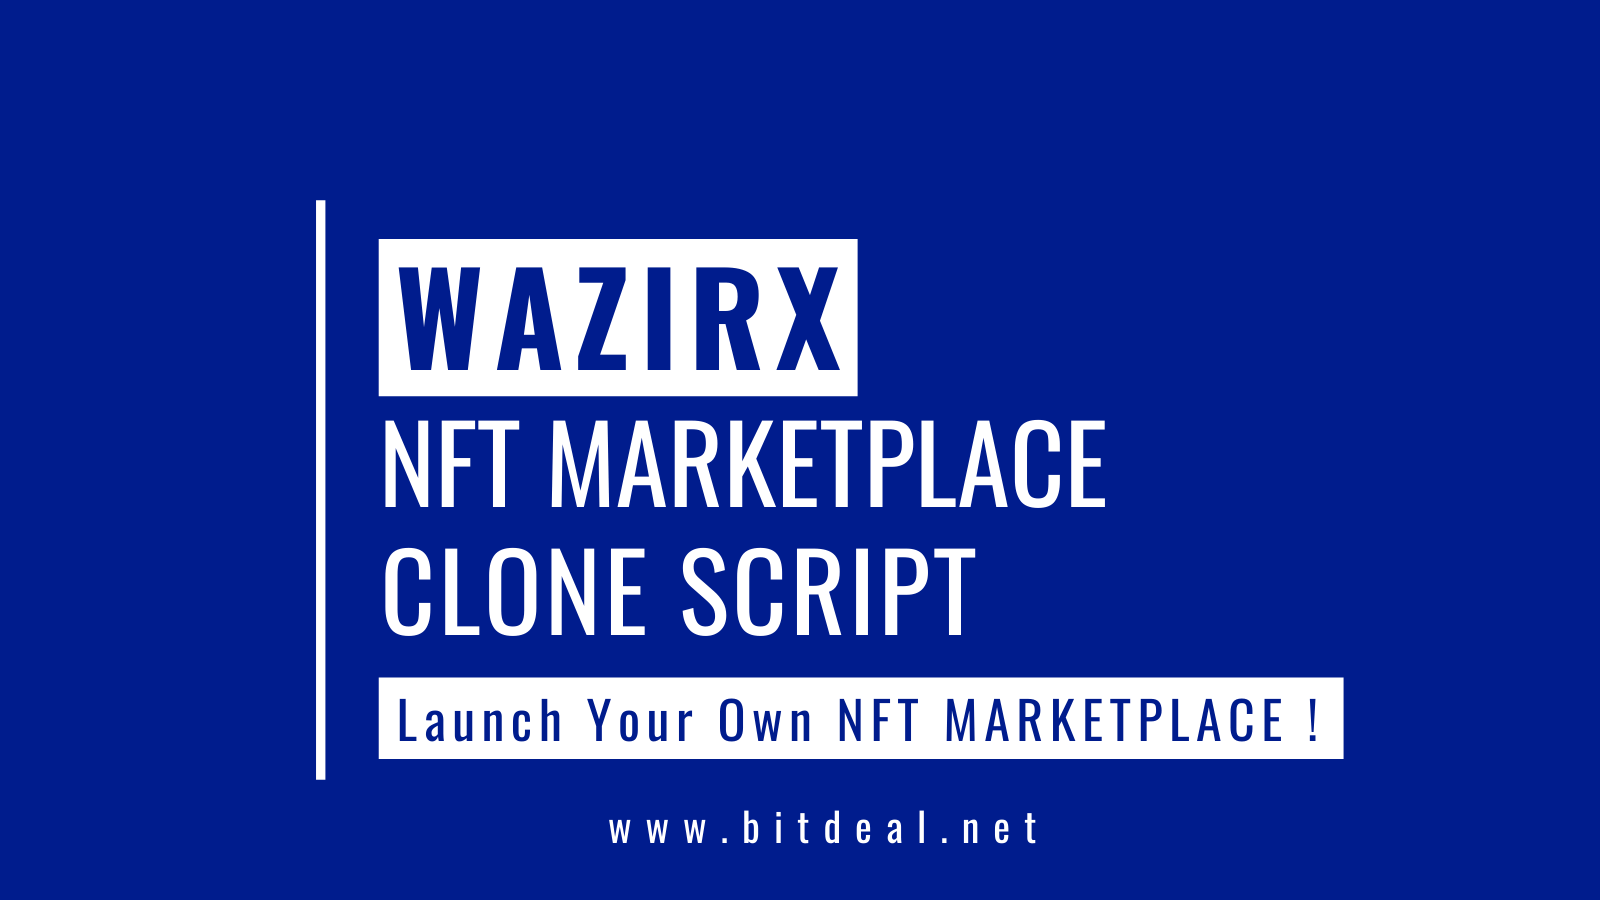 Wazirx NFT Marketplace Clone Script To Start An NFT Marketplace Like Wazirx NFT